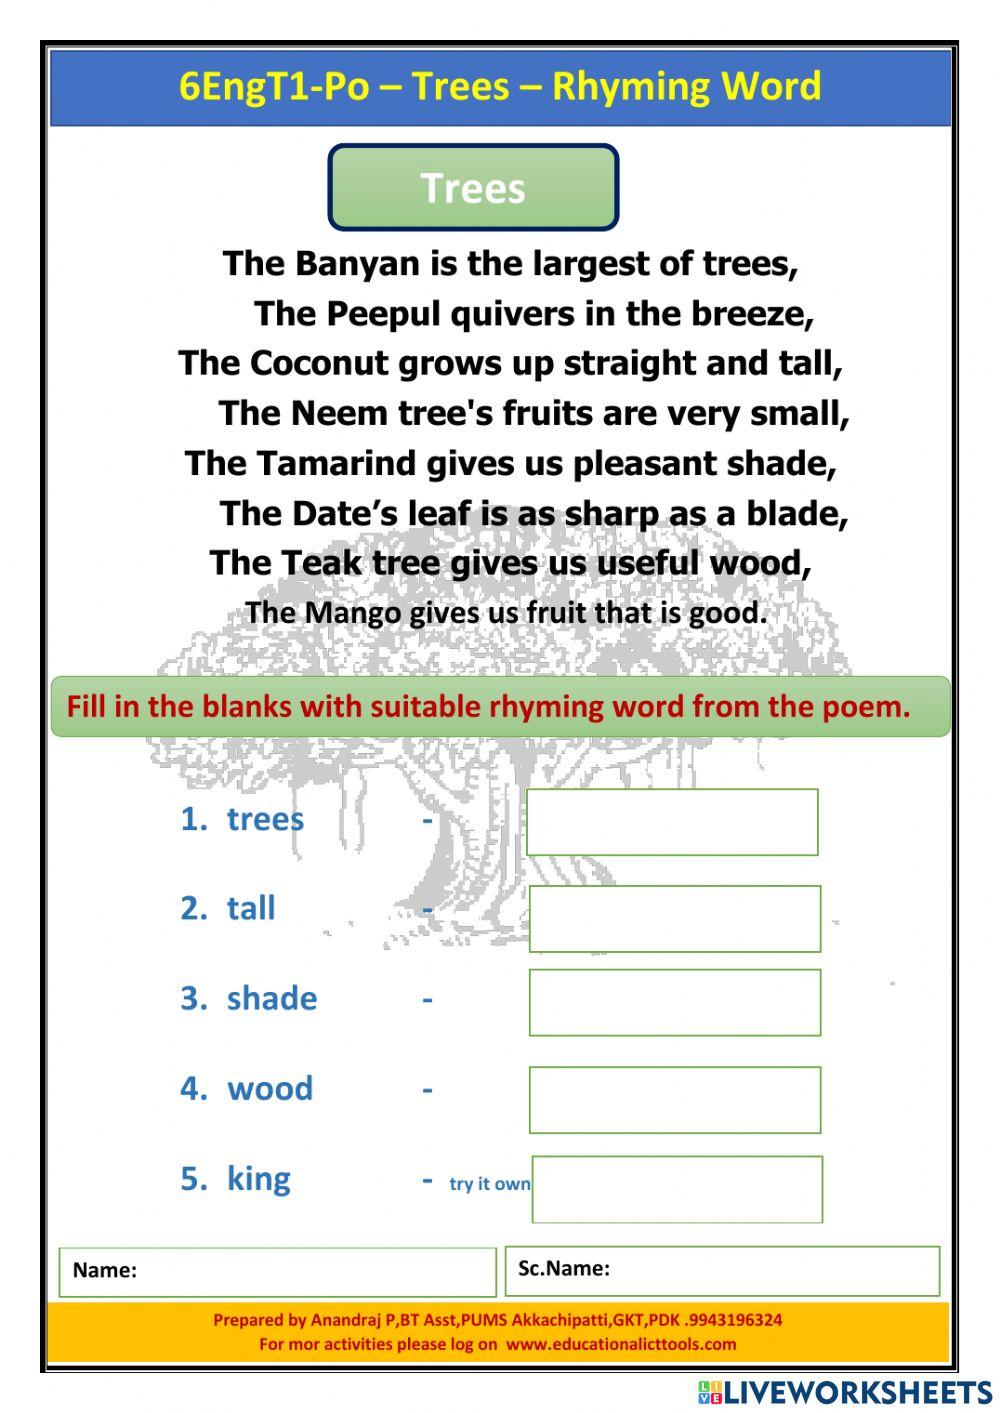 6EngT1-Po-Trees-Rhyming word